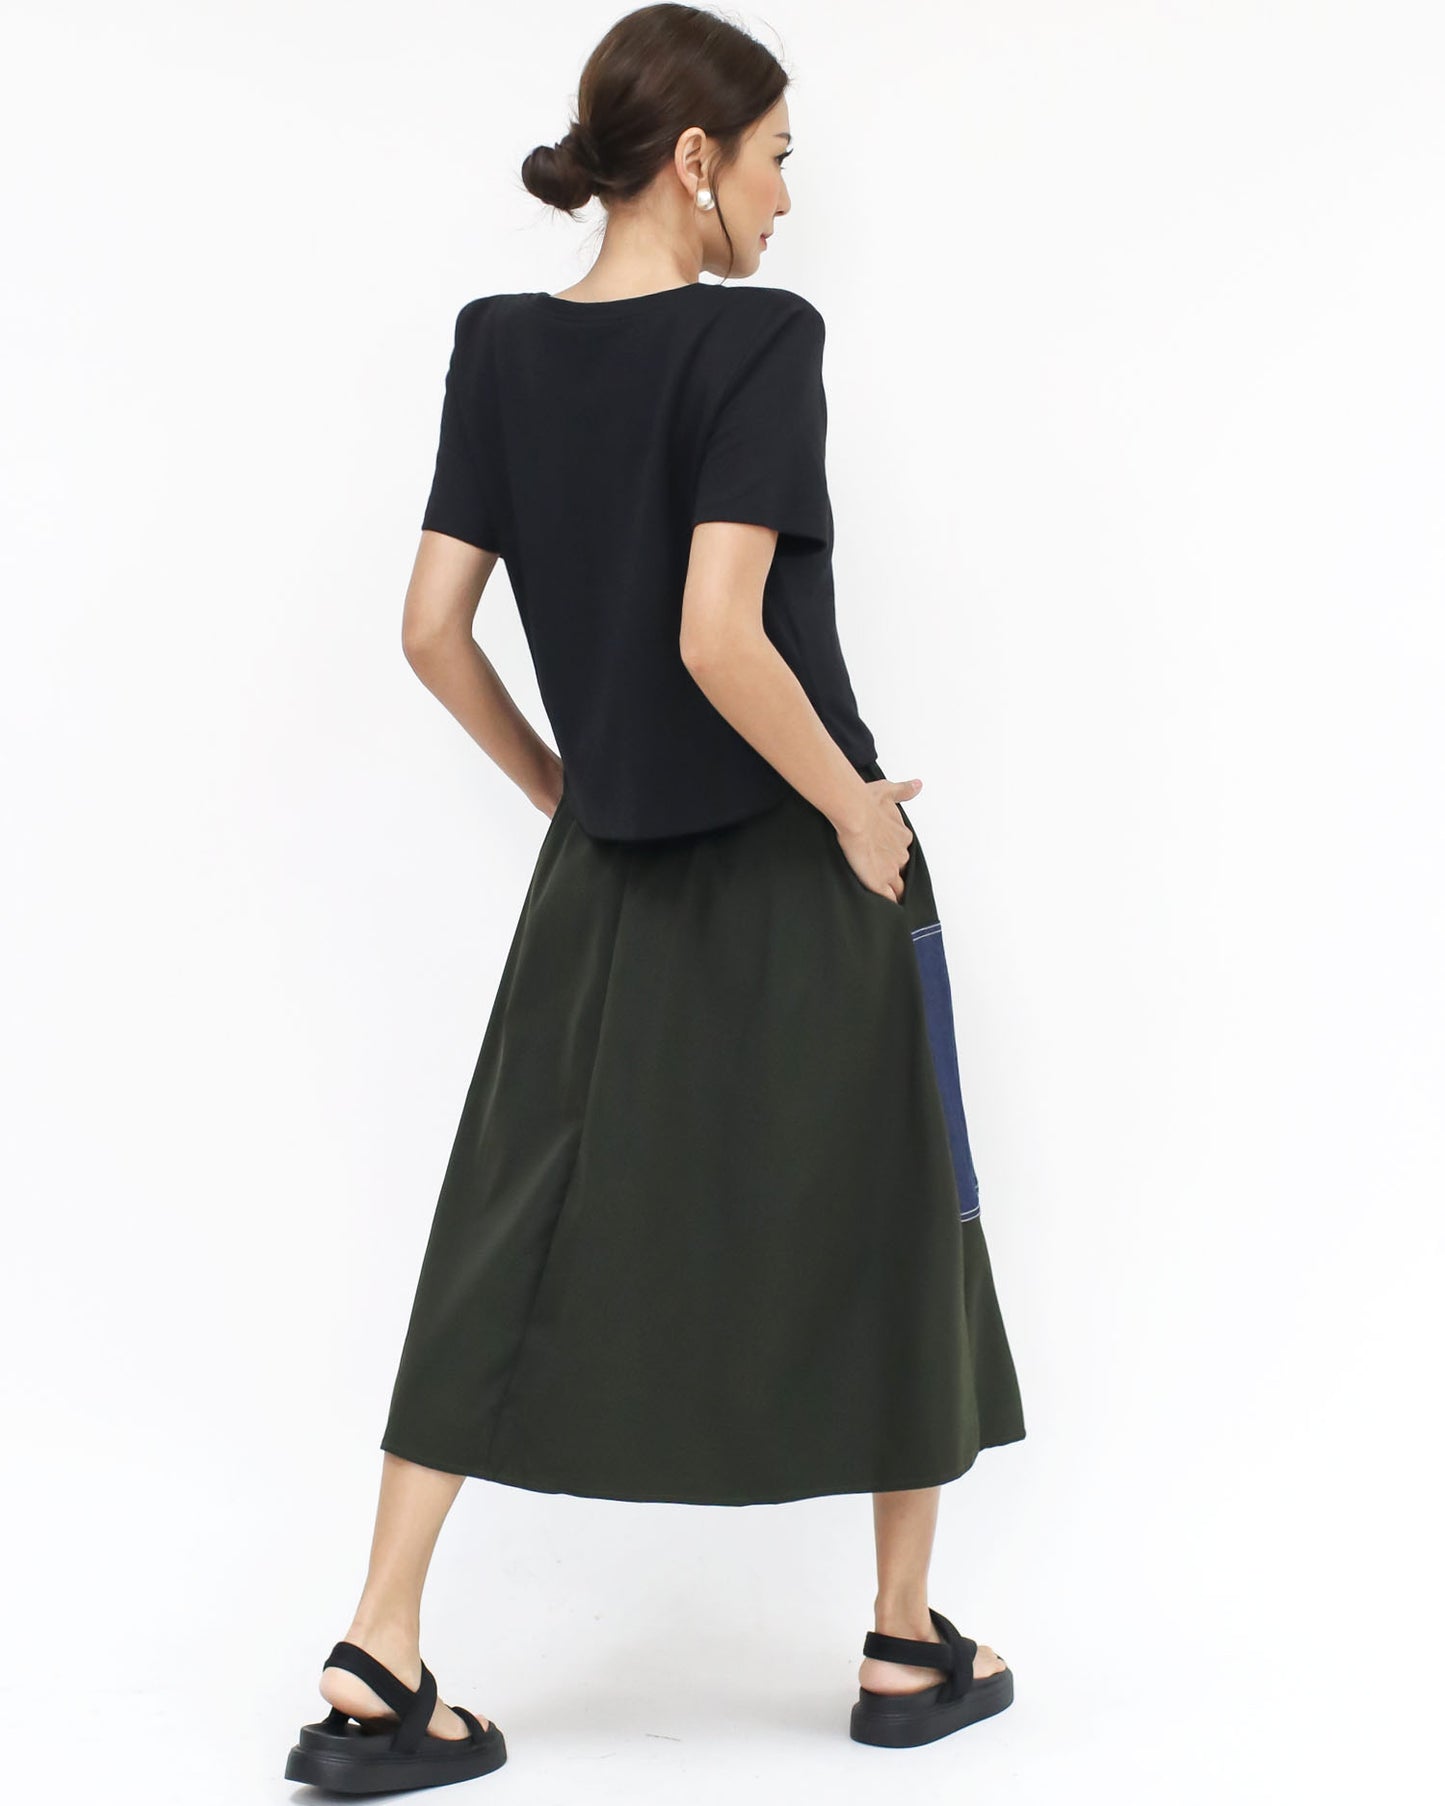 black tee w/ green & denim contrast dress